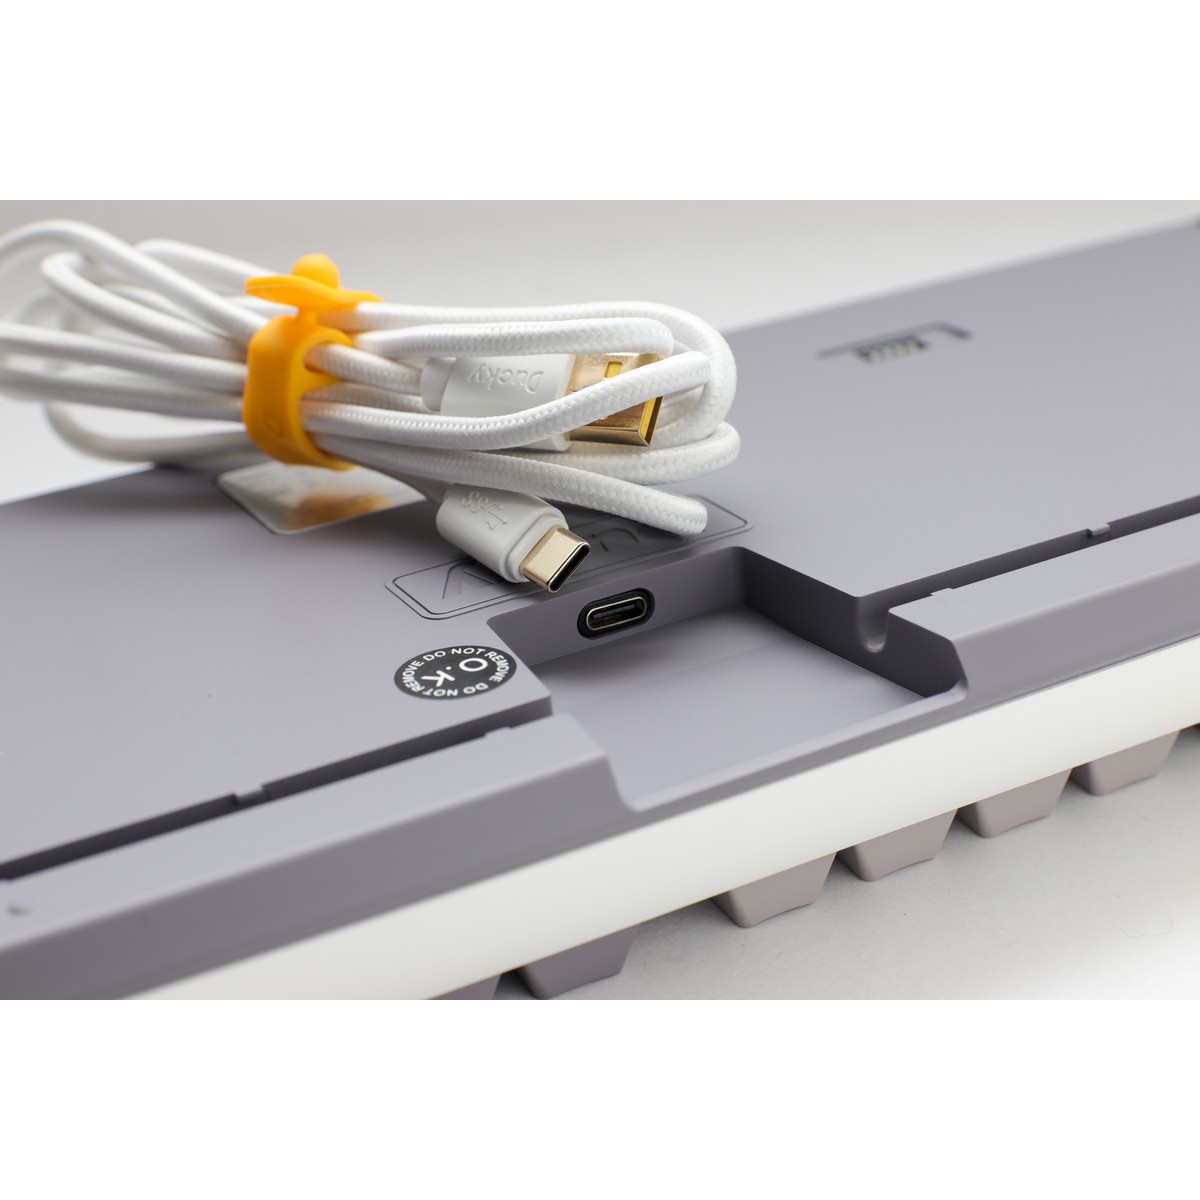 Ducky - Ducky One 3 Mist TKL 80% USB RGB Mechanical Gaming Keyboard Cherry MX Red Switch - UK Layout